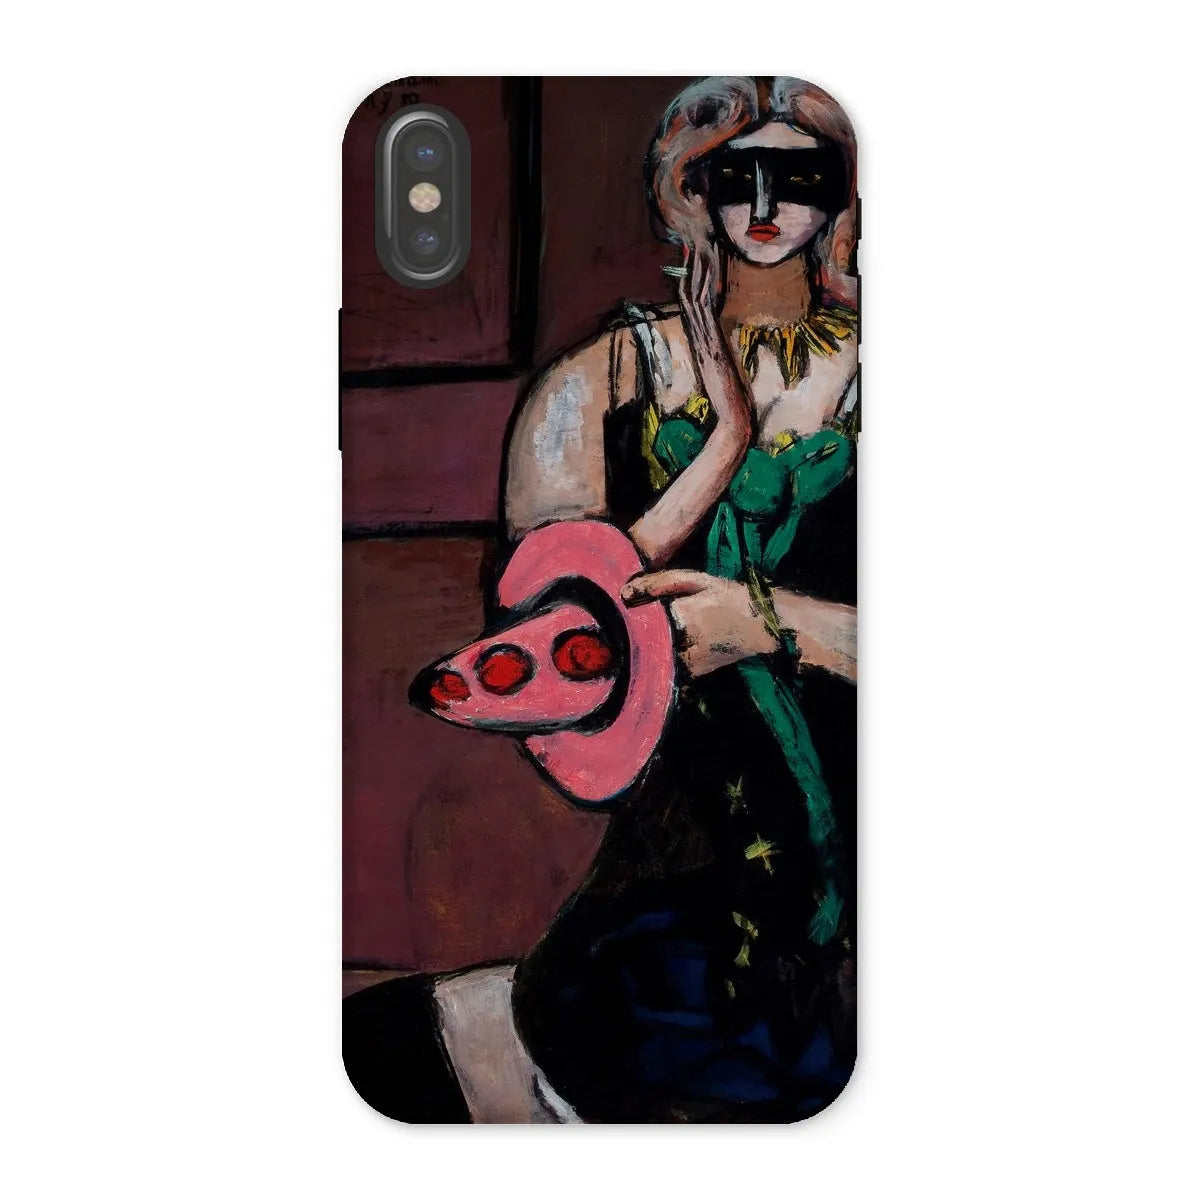 Carnival Mask - German Art Phone Case - Max Beckmann - Iphone x / Matte - Mobile Phone Cases - Aesthetic Art